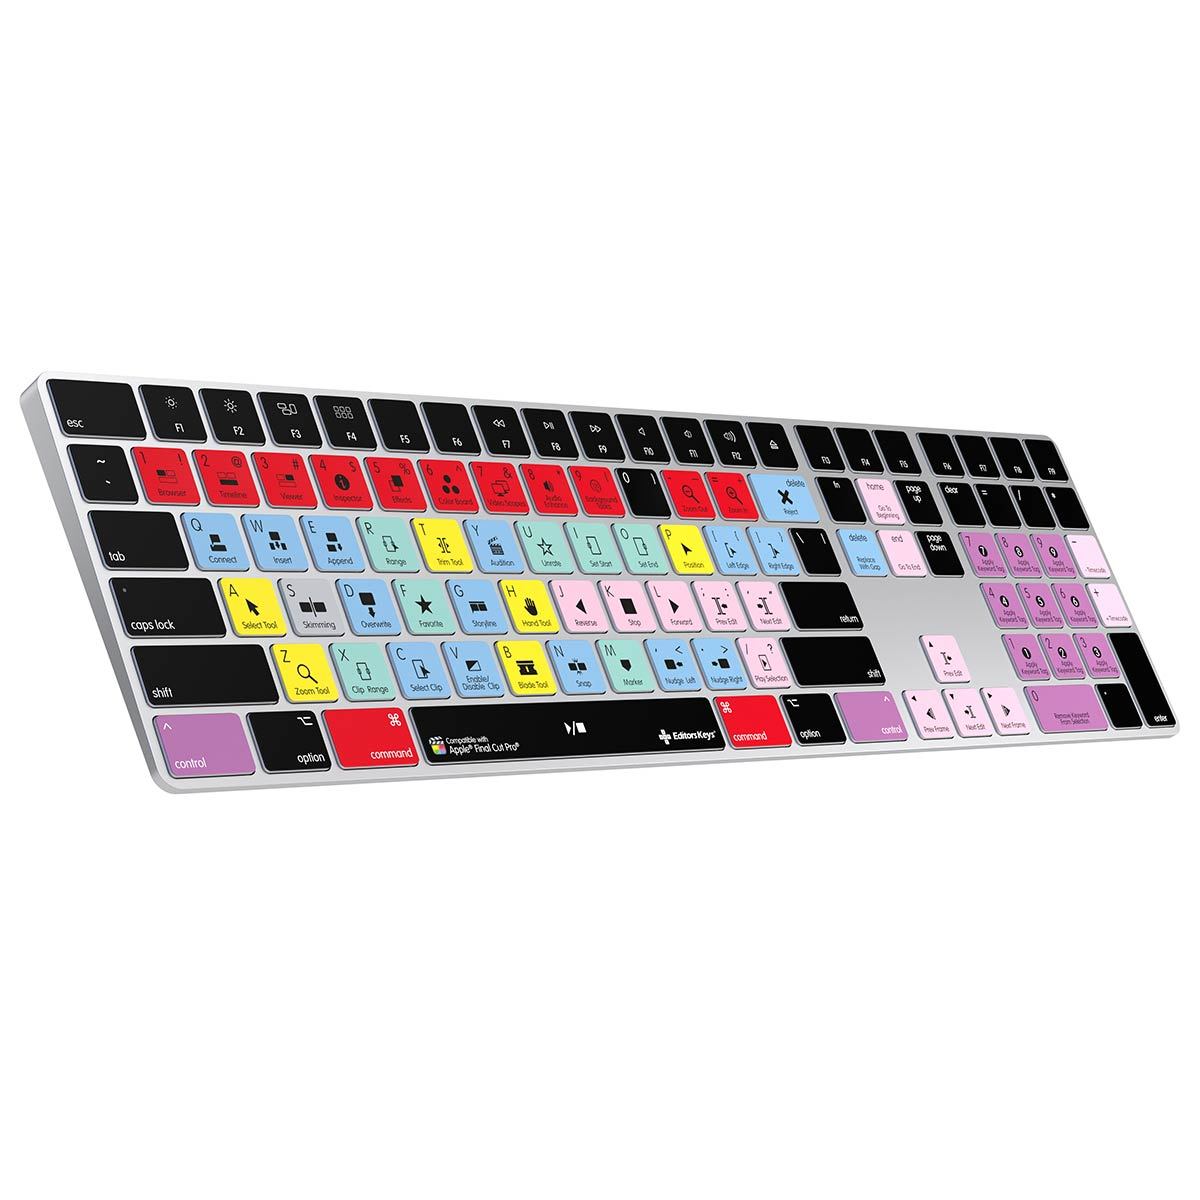 Genuine Apple Keyboard Customised by Editors Keys for Final cut Pro USA Layout Side